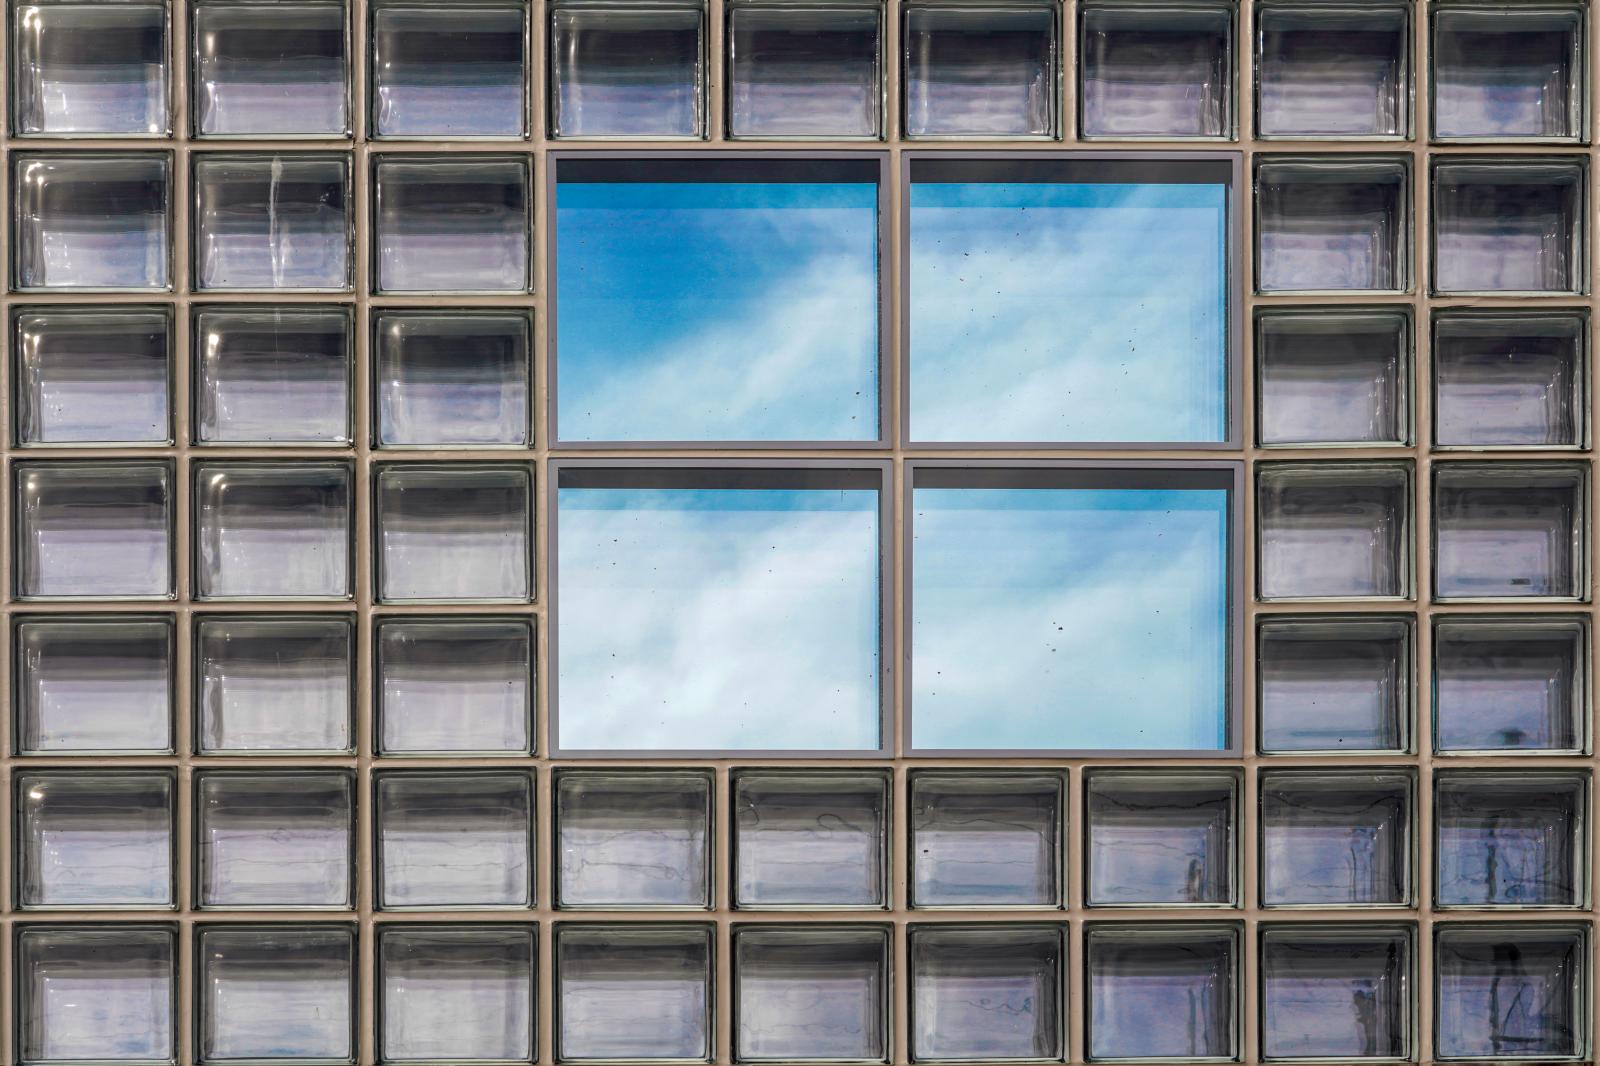 Azure Glimpse: Skylight through the Veil | Buy this image